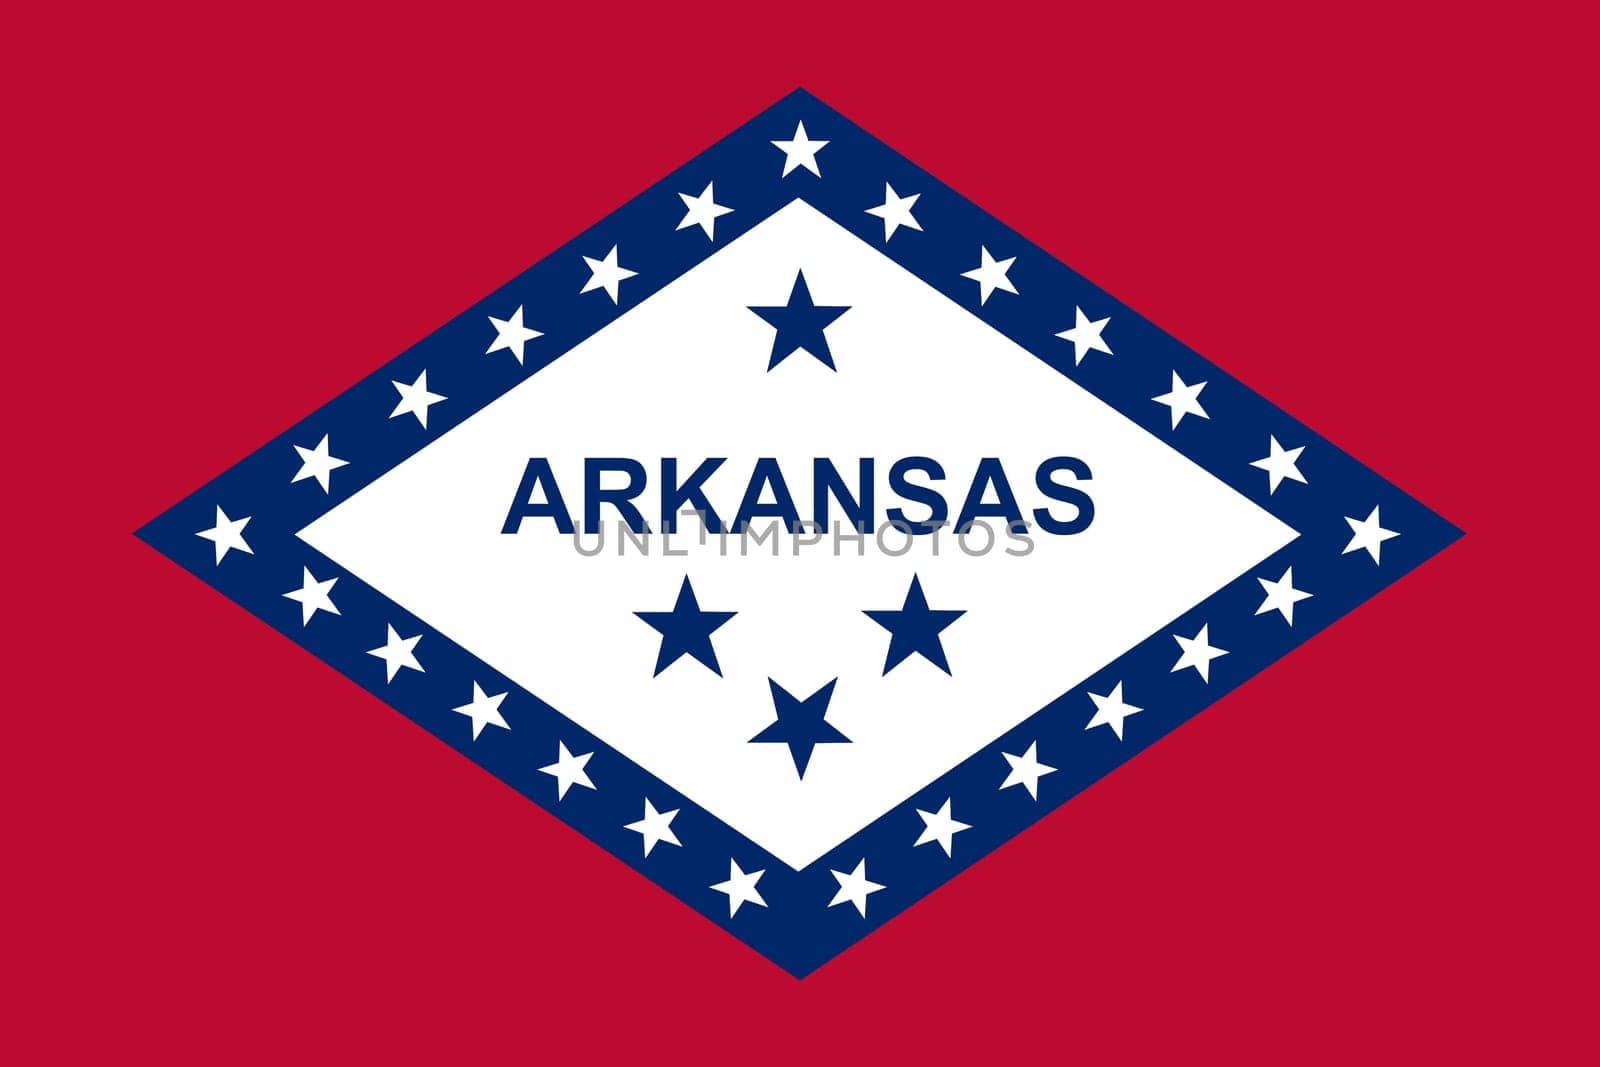 An Arkansas State Flag background illustration